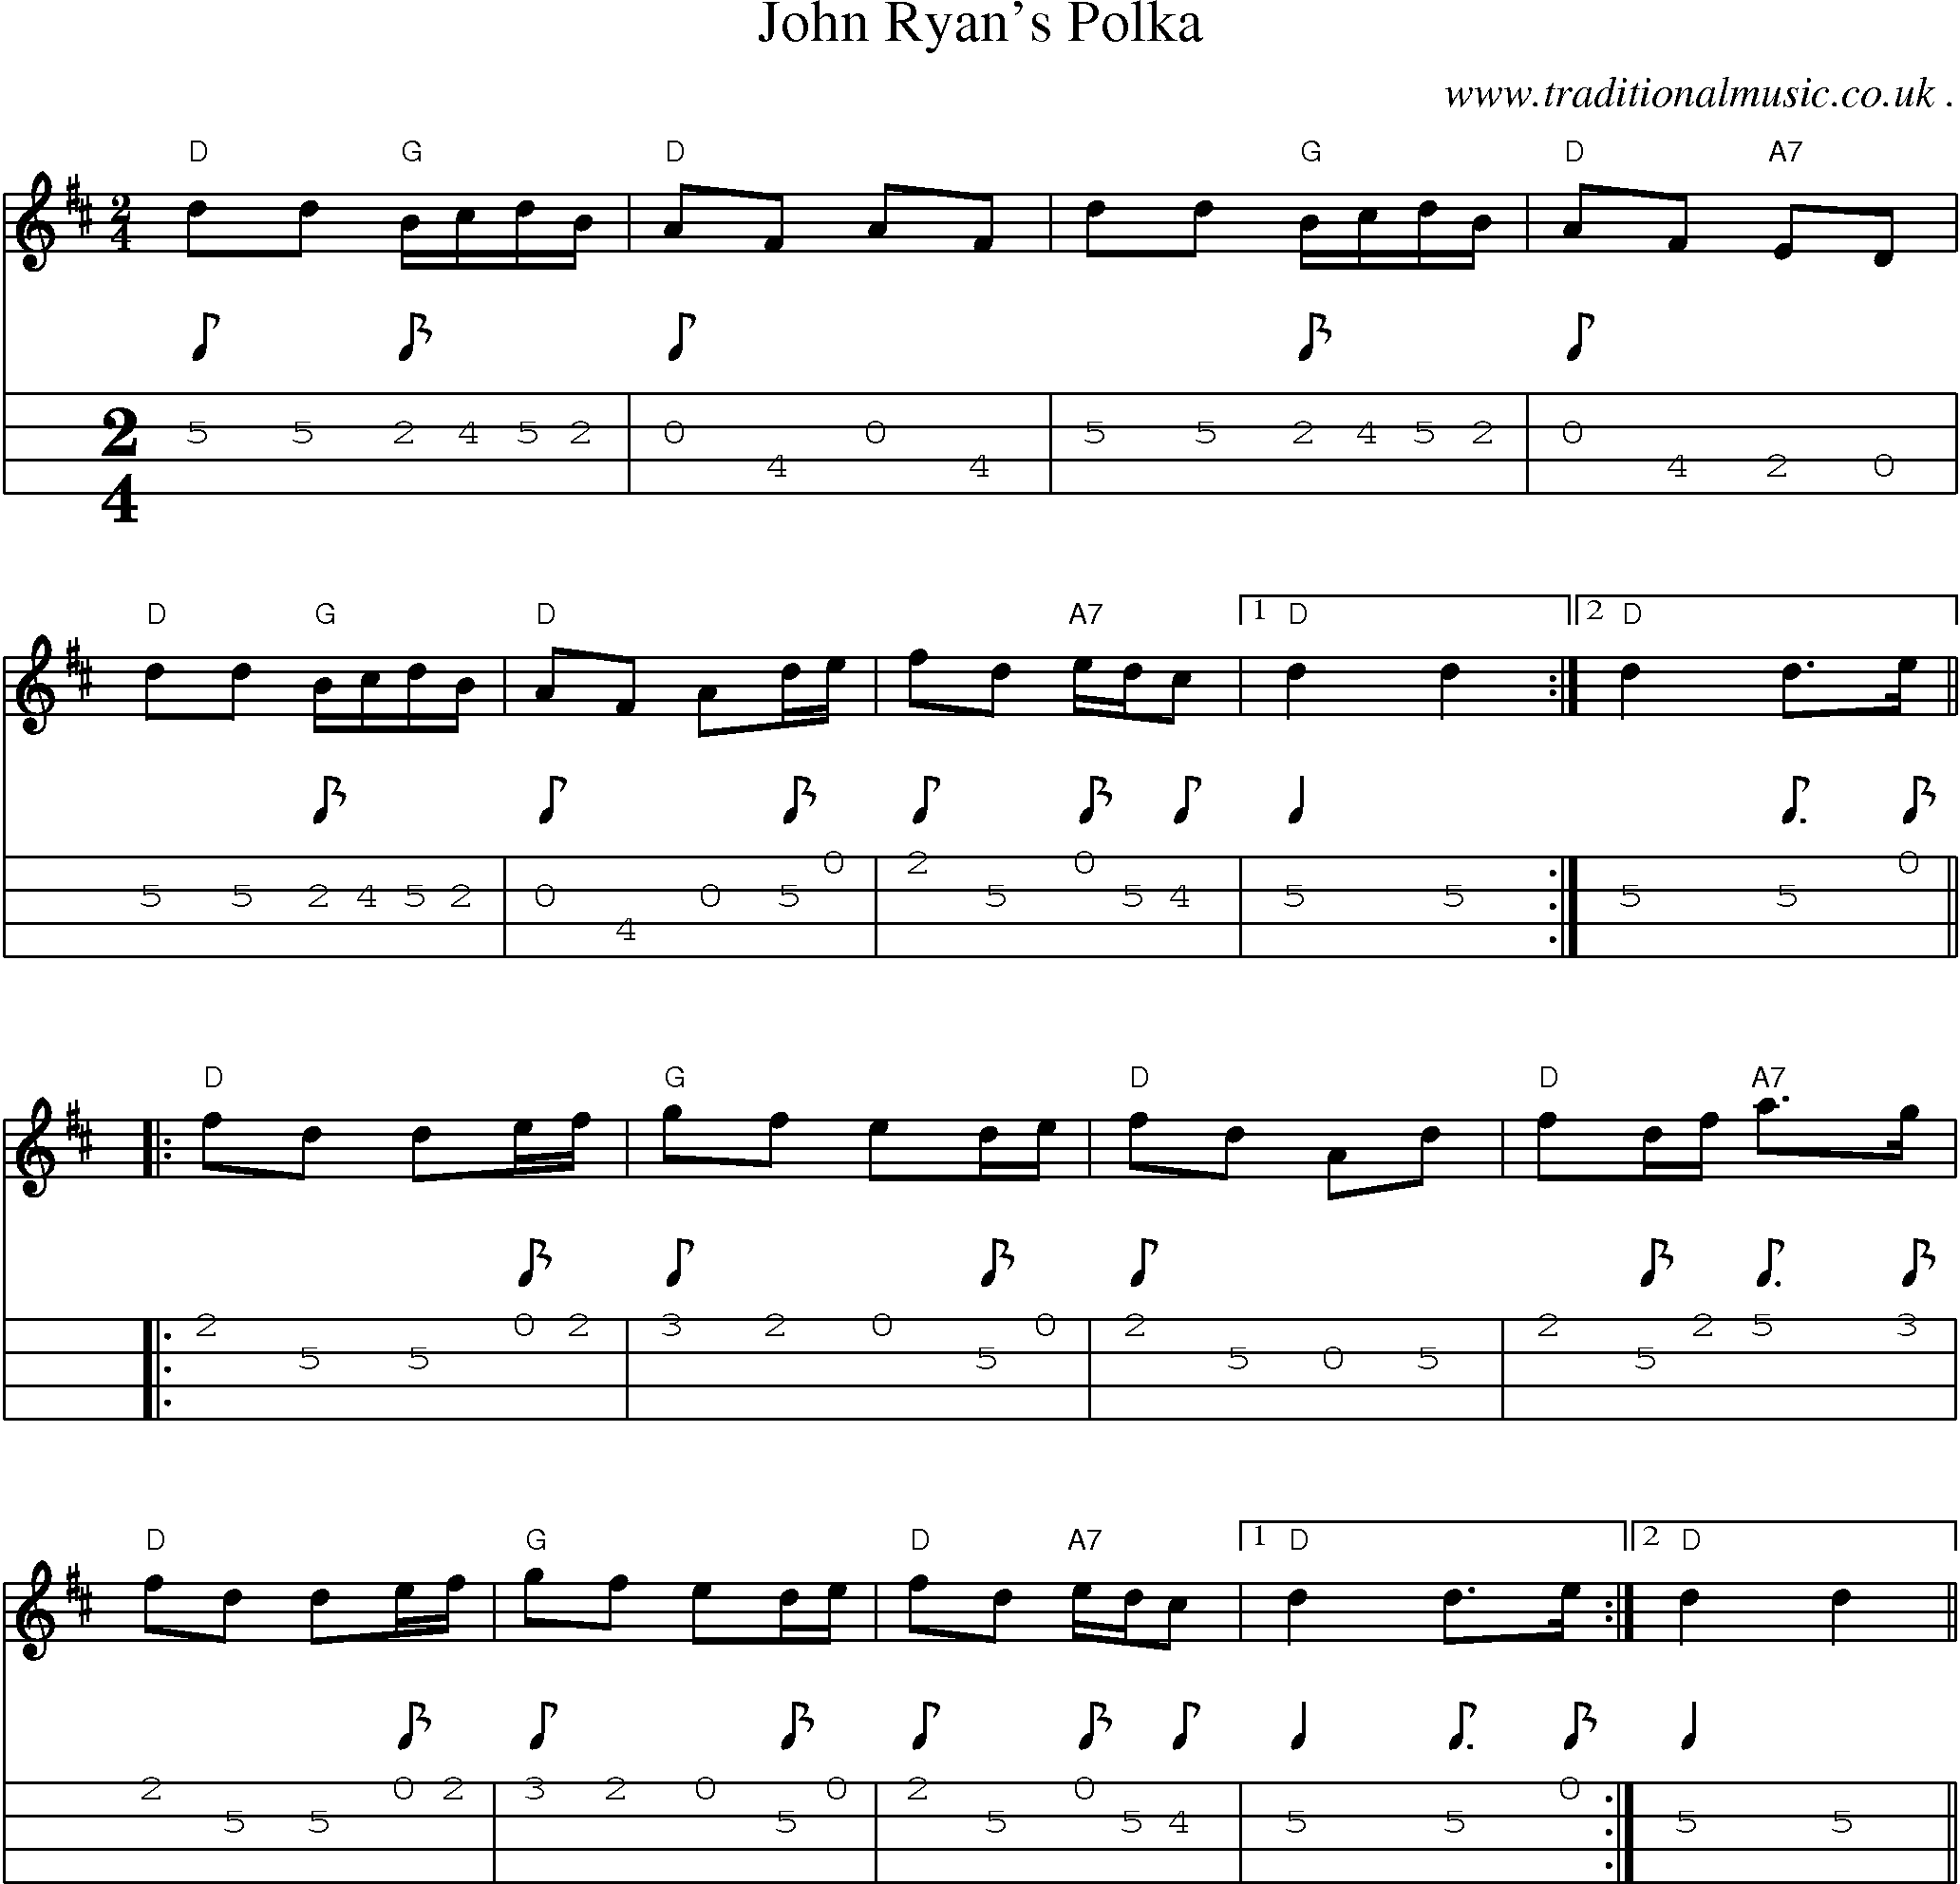 John Ryan's Polka